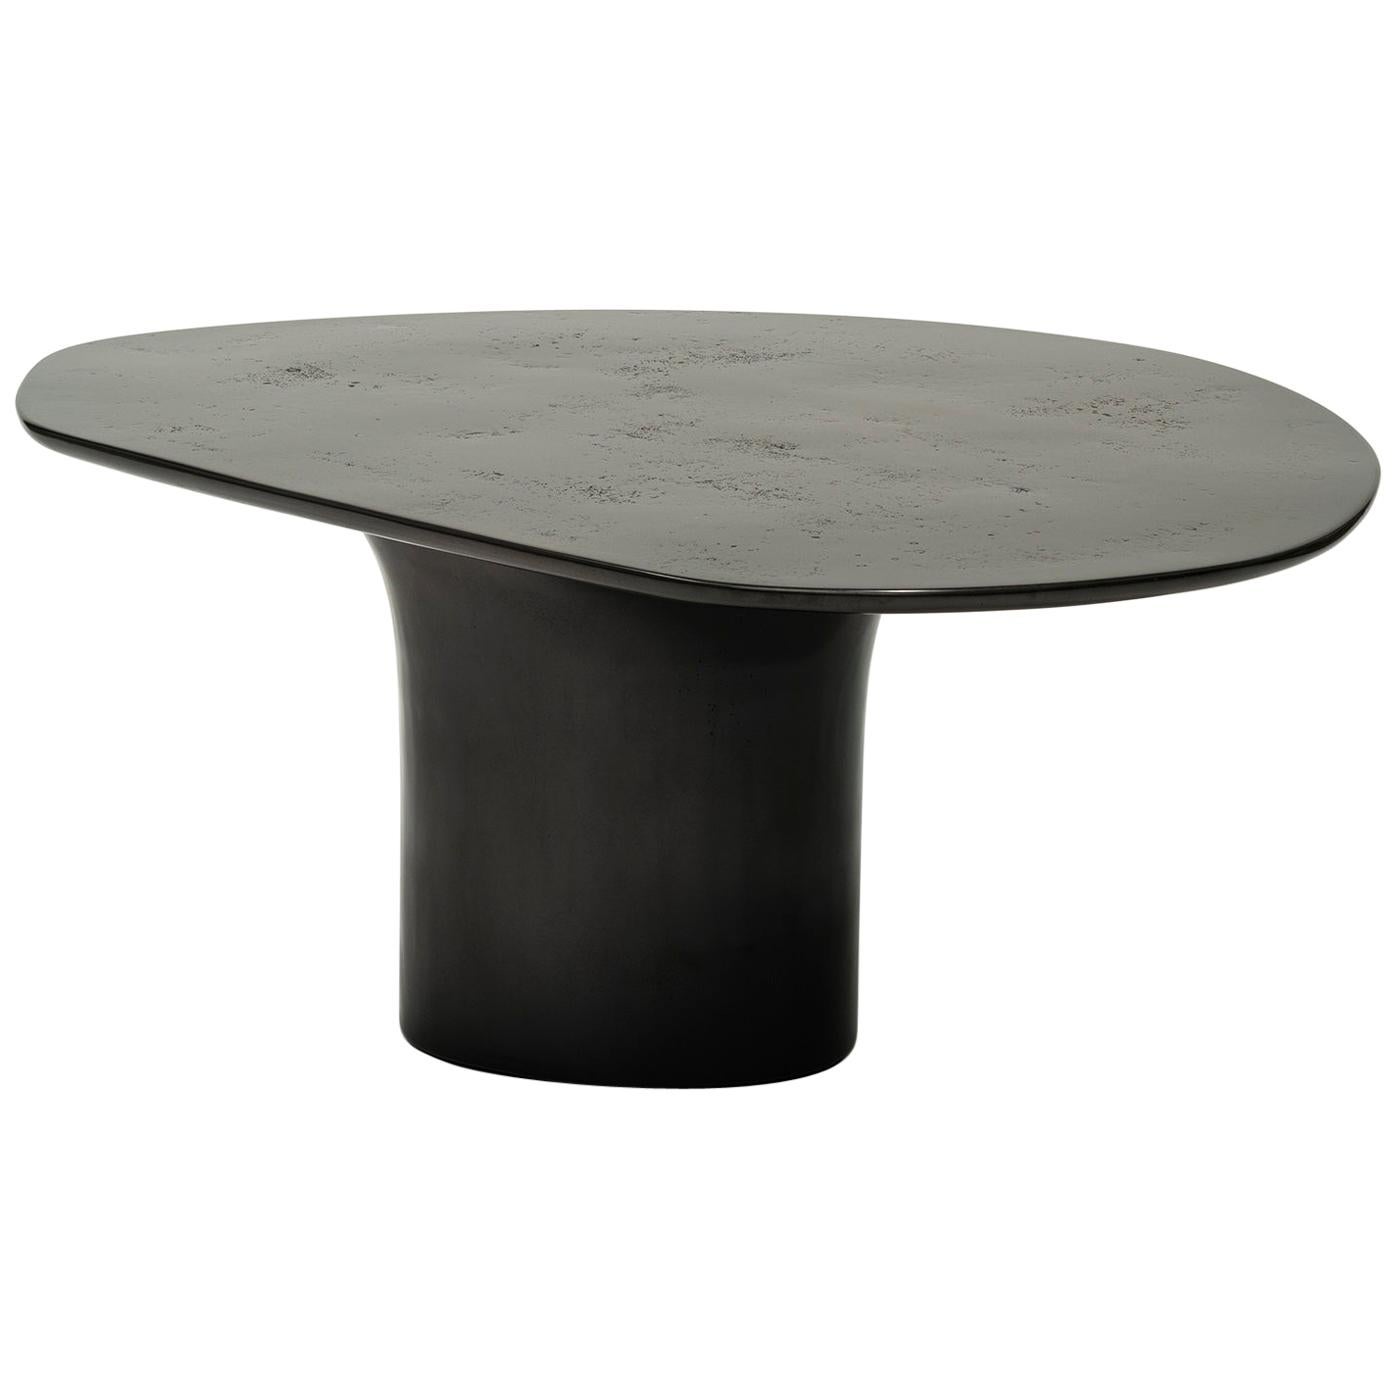 NR Black Smooth Pinin, Contemporary Sculptured Circular Black Low Table